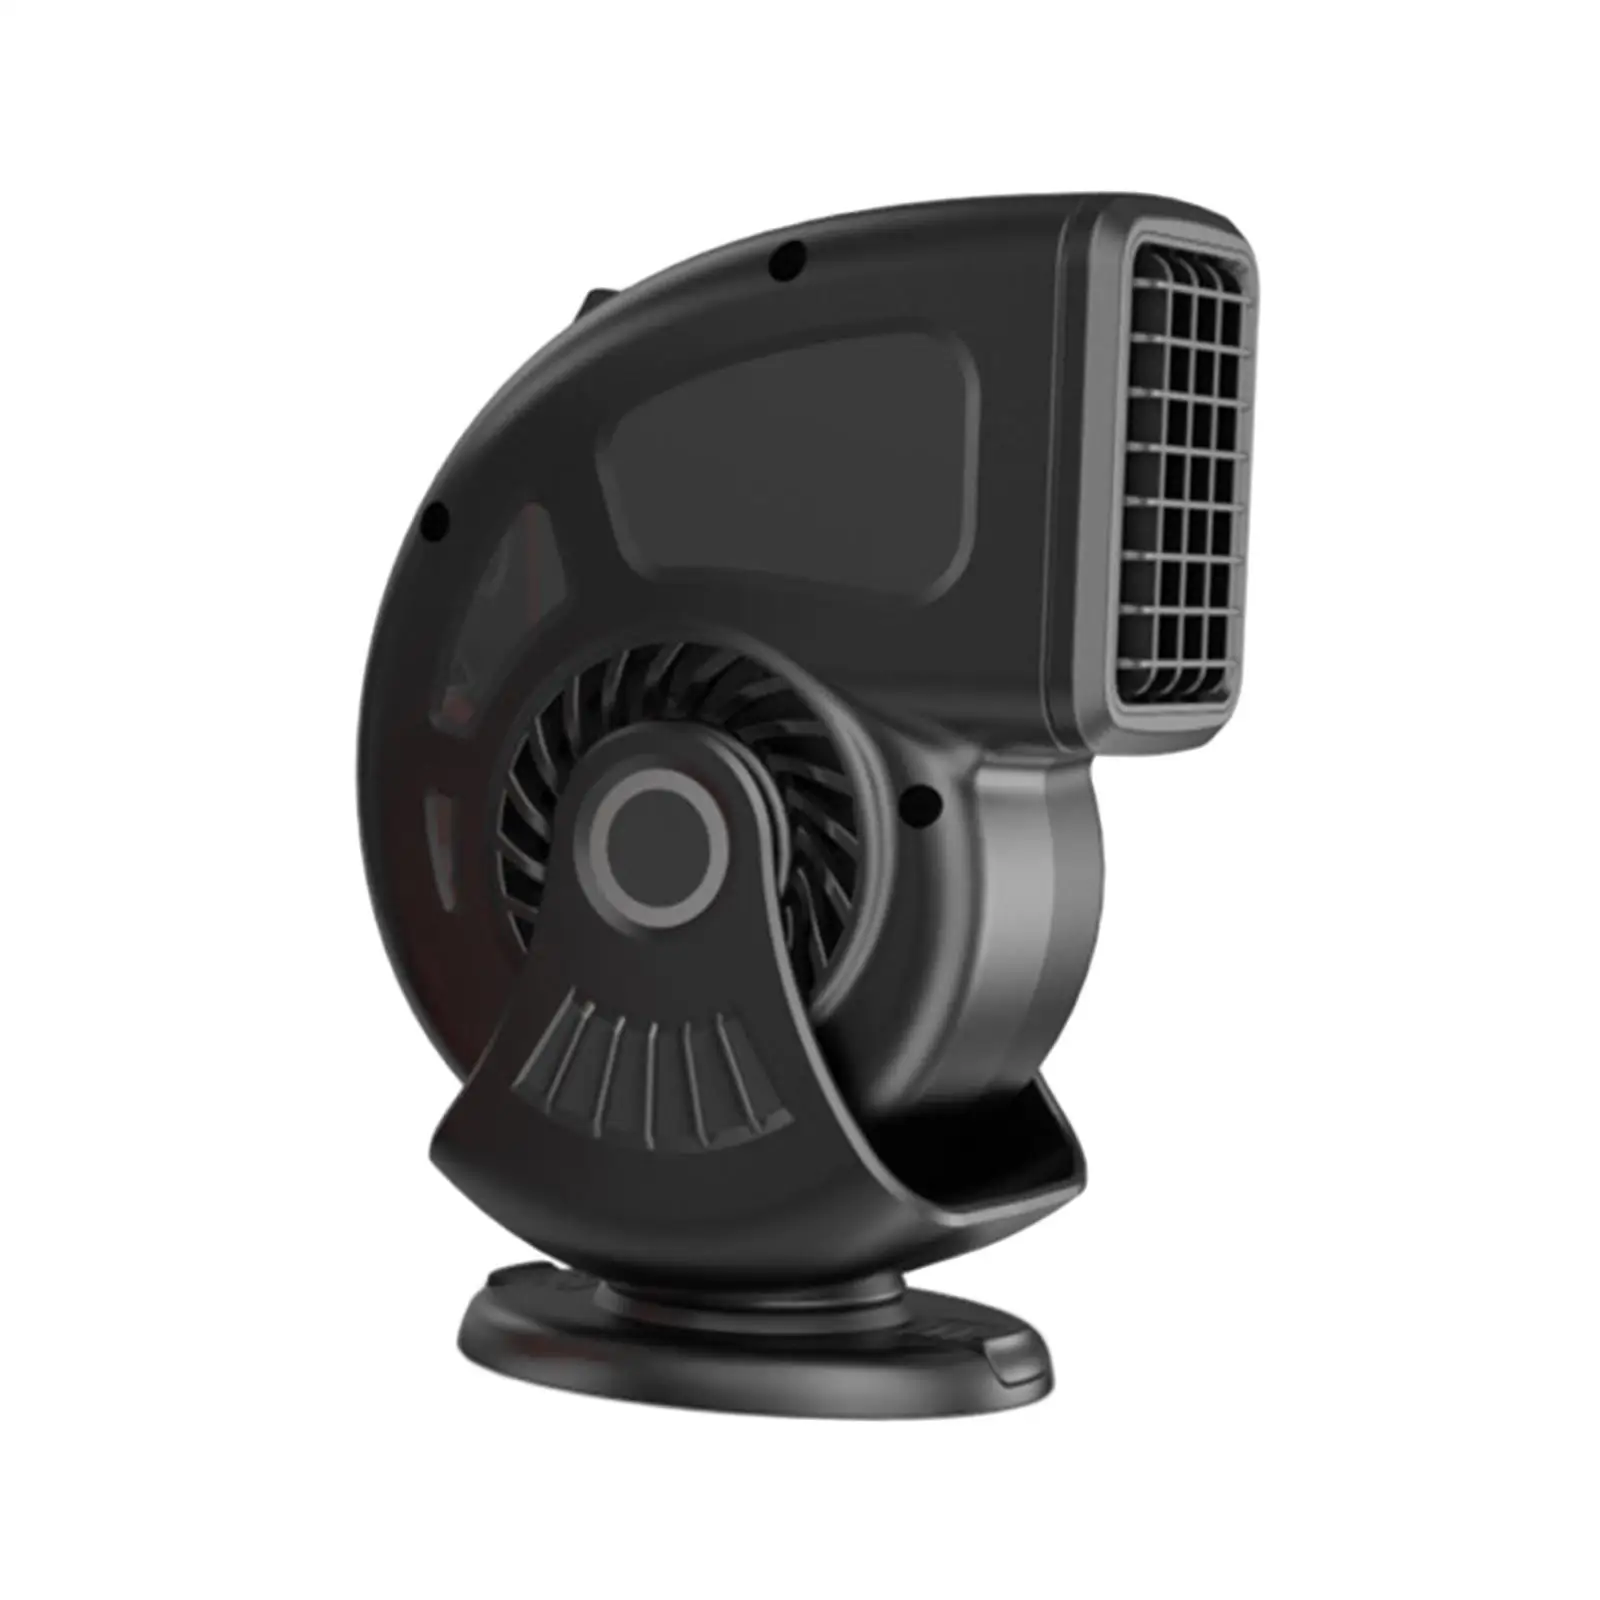 Car Heater Warmer Machine Multifunctional Humanized Design Auto Heating Fan